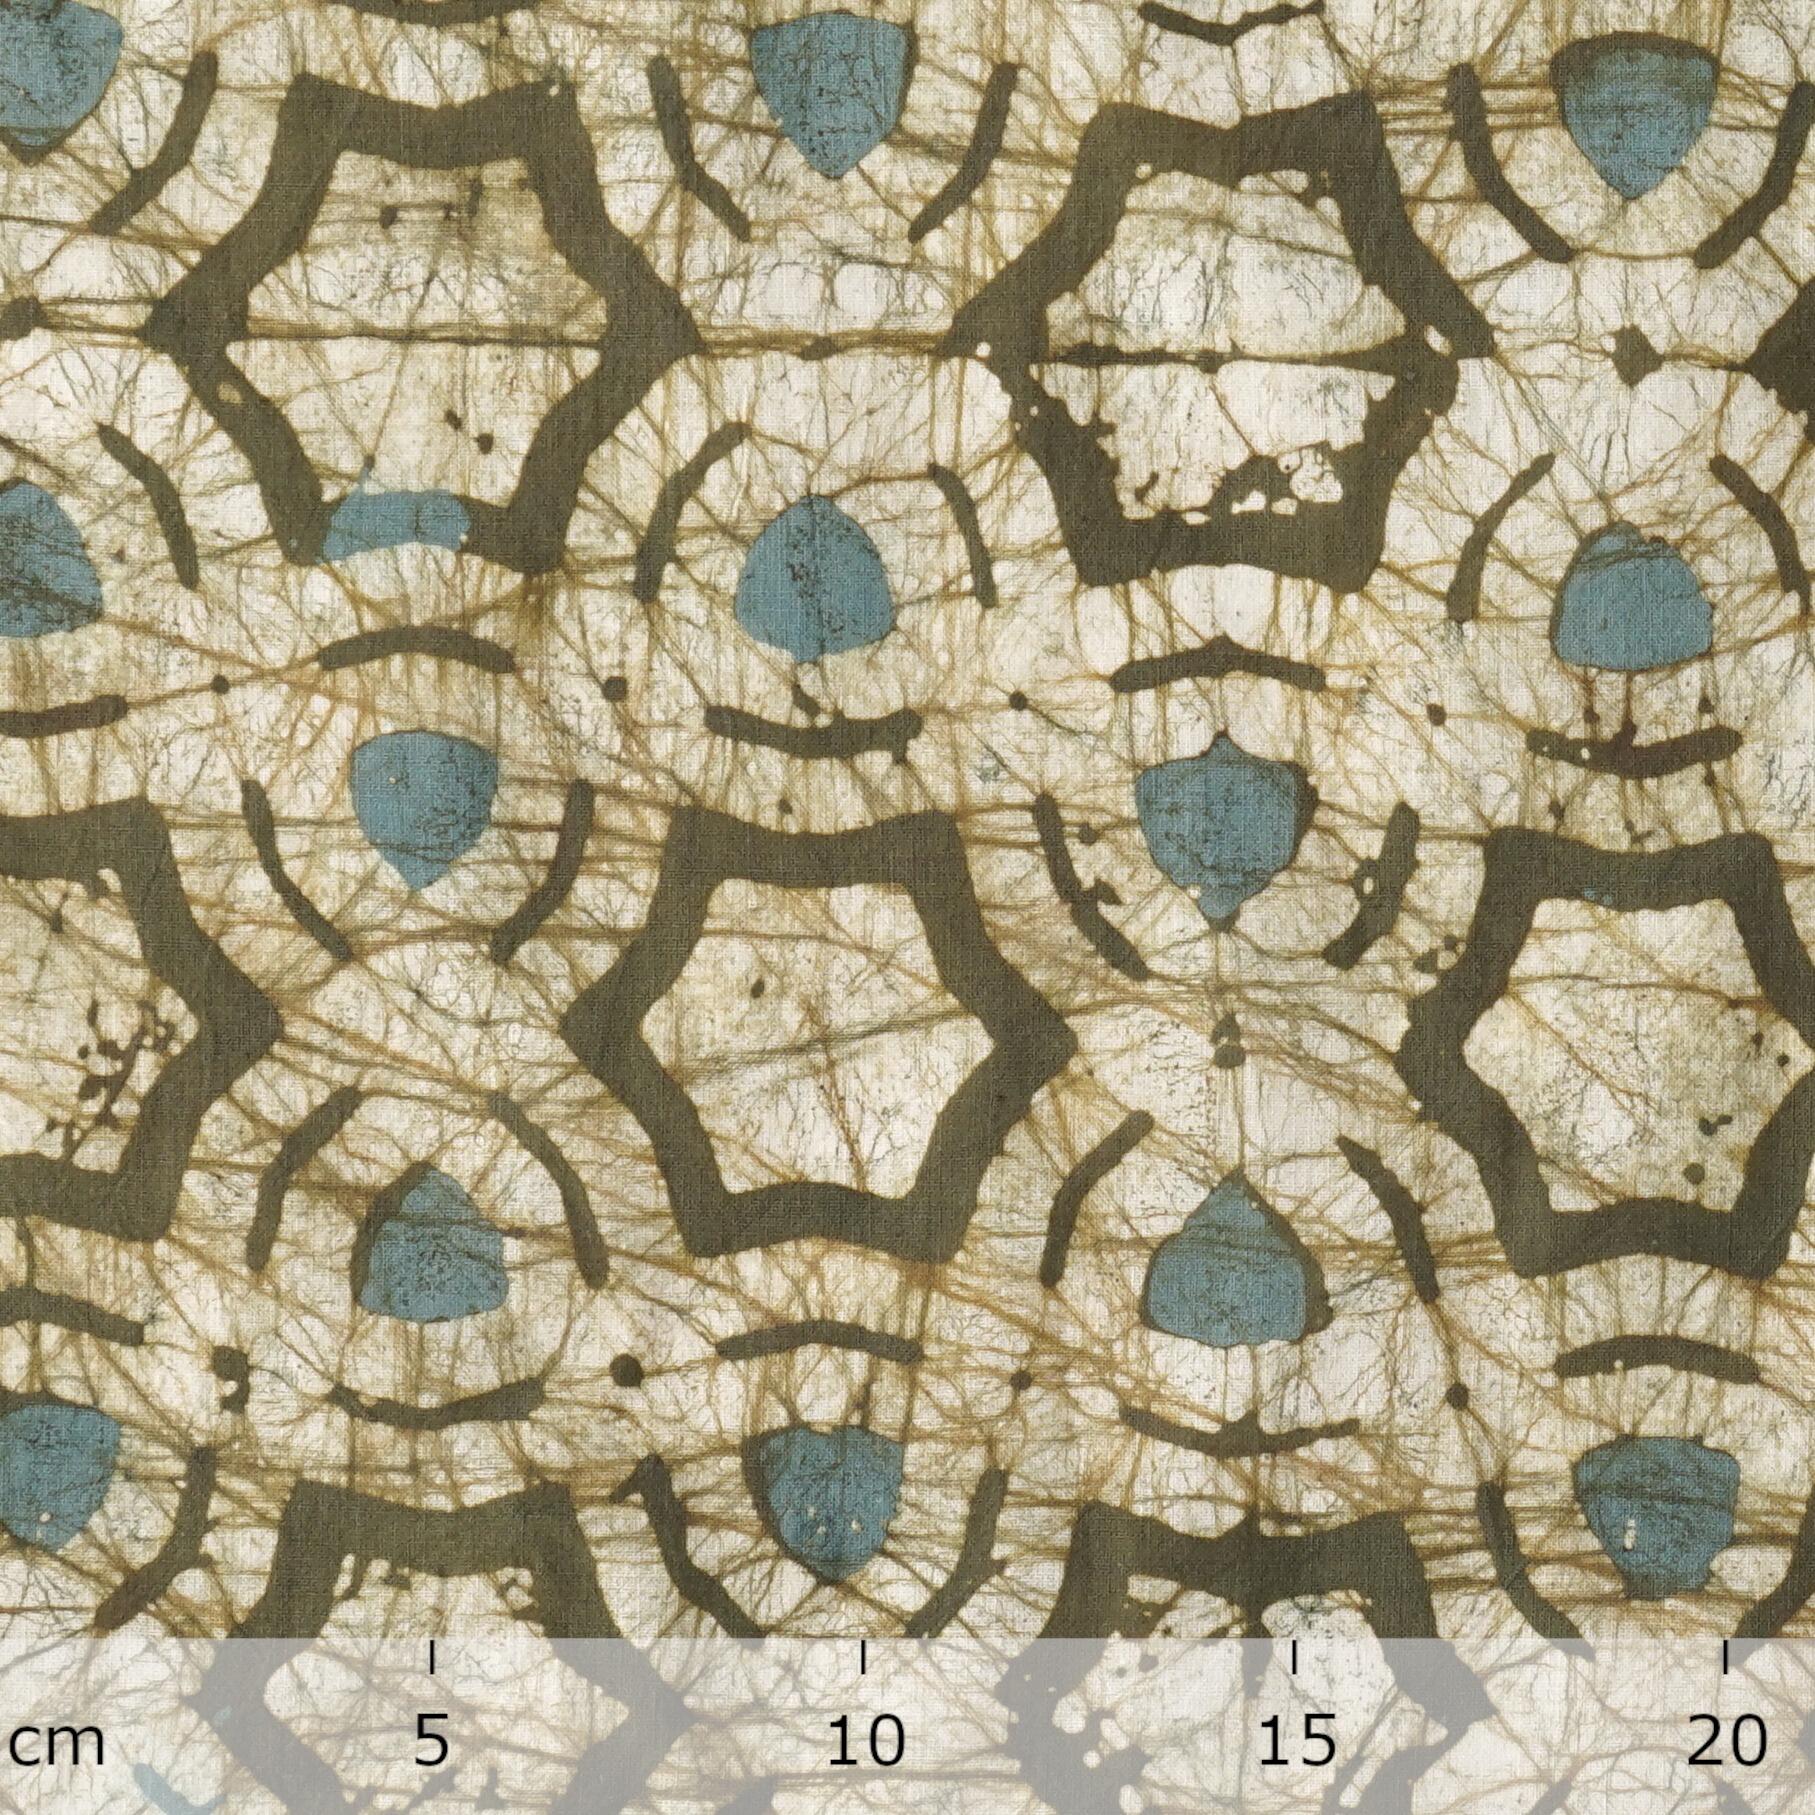 Block-Printed Batik Fabric - Cotton Cloth - Reactive Dyes - Zimtstern Design - Ruler